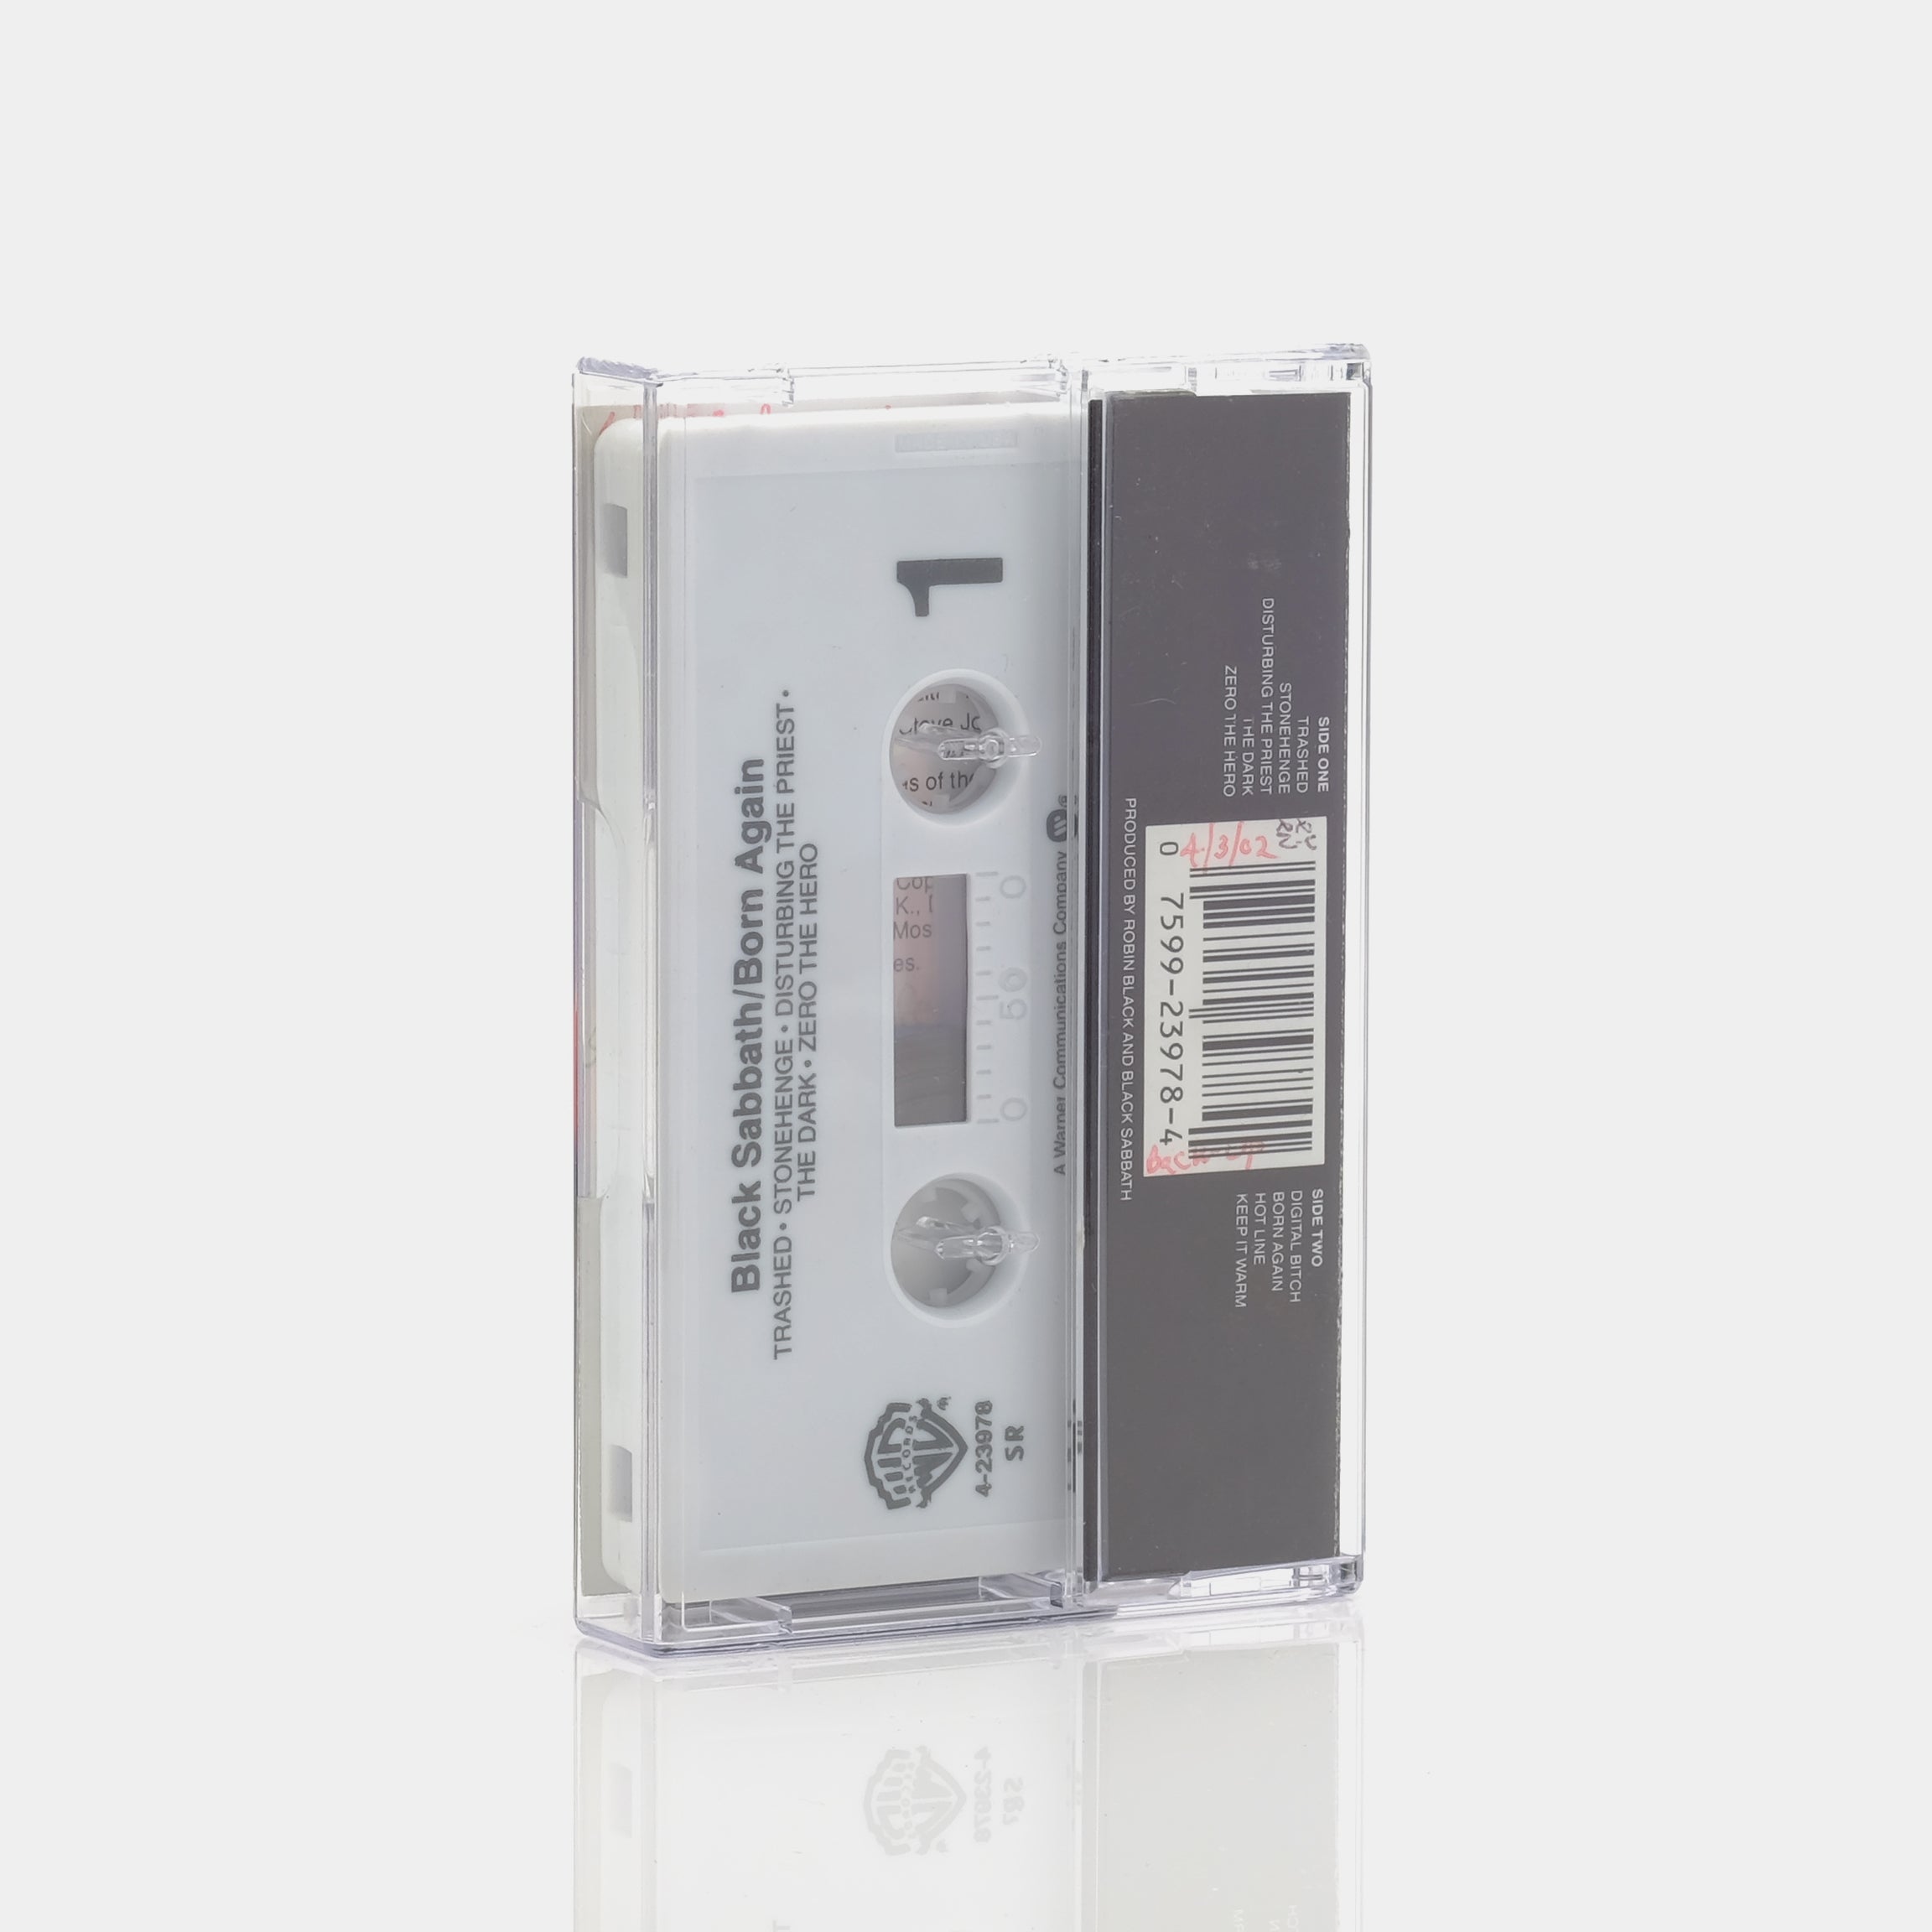 Black Sabbath - Born Again Cassette Tape